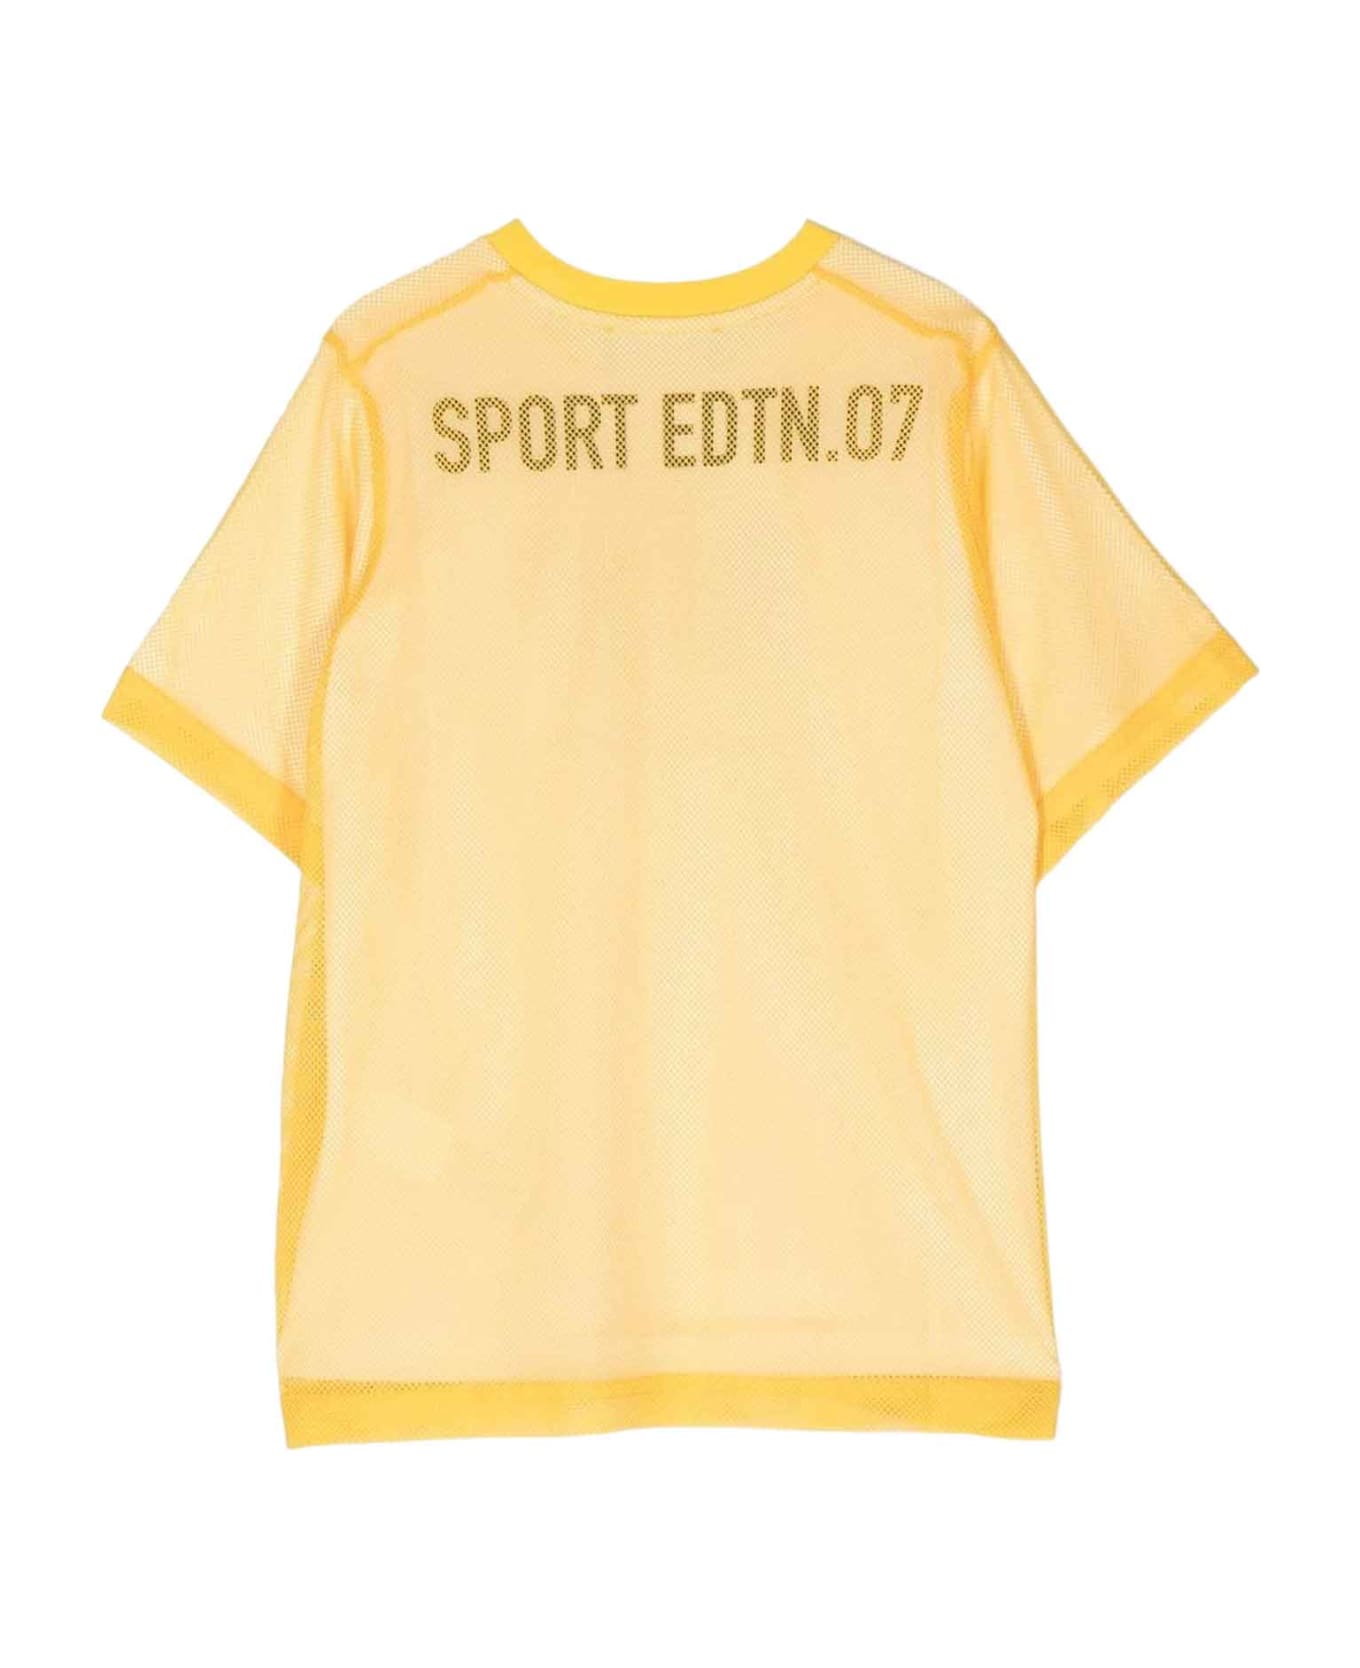 Dsquared2 Yellow T-shirt Unisex - Giallo